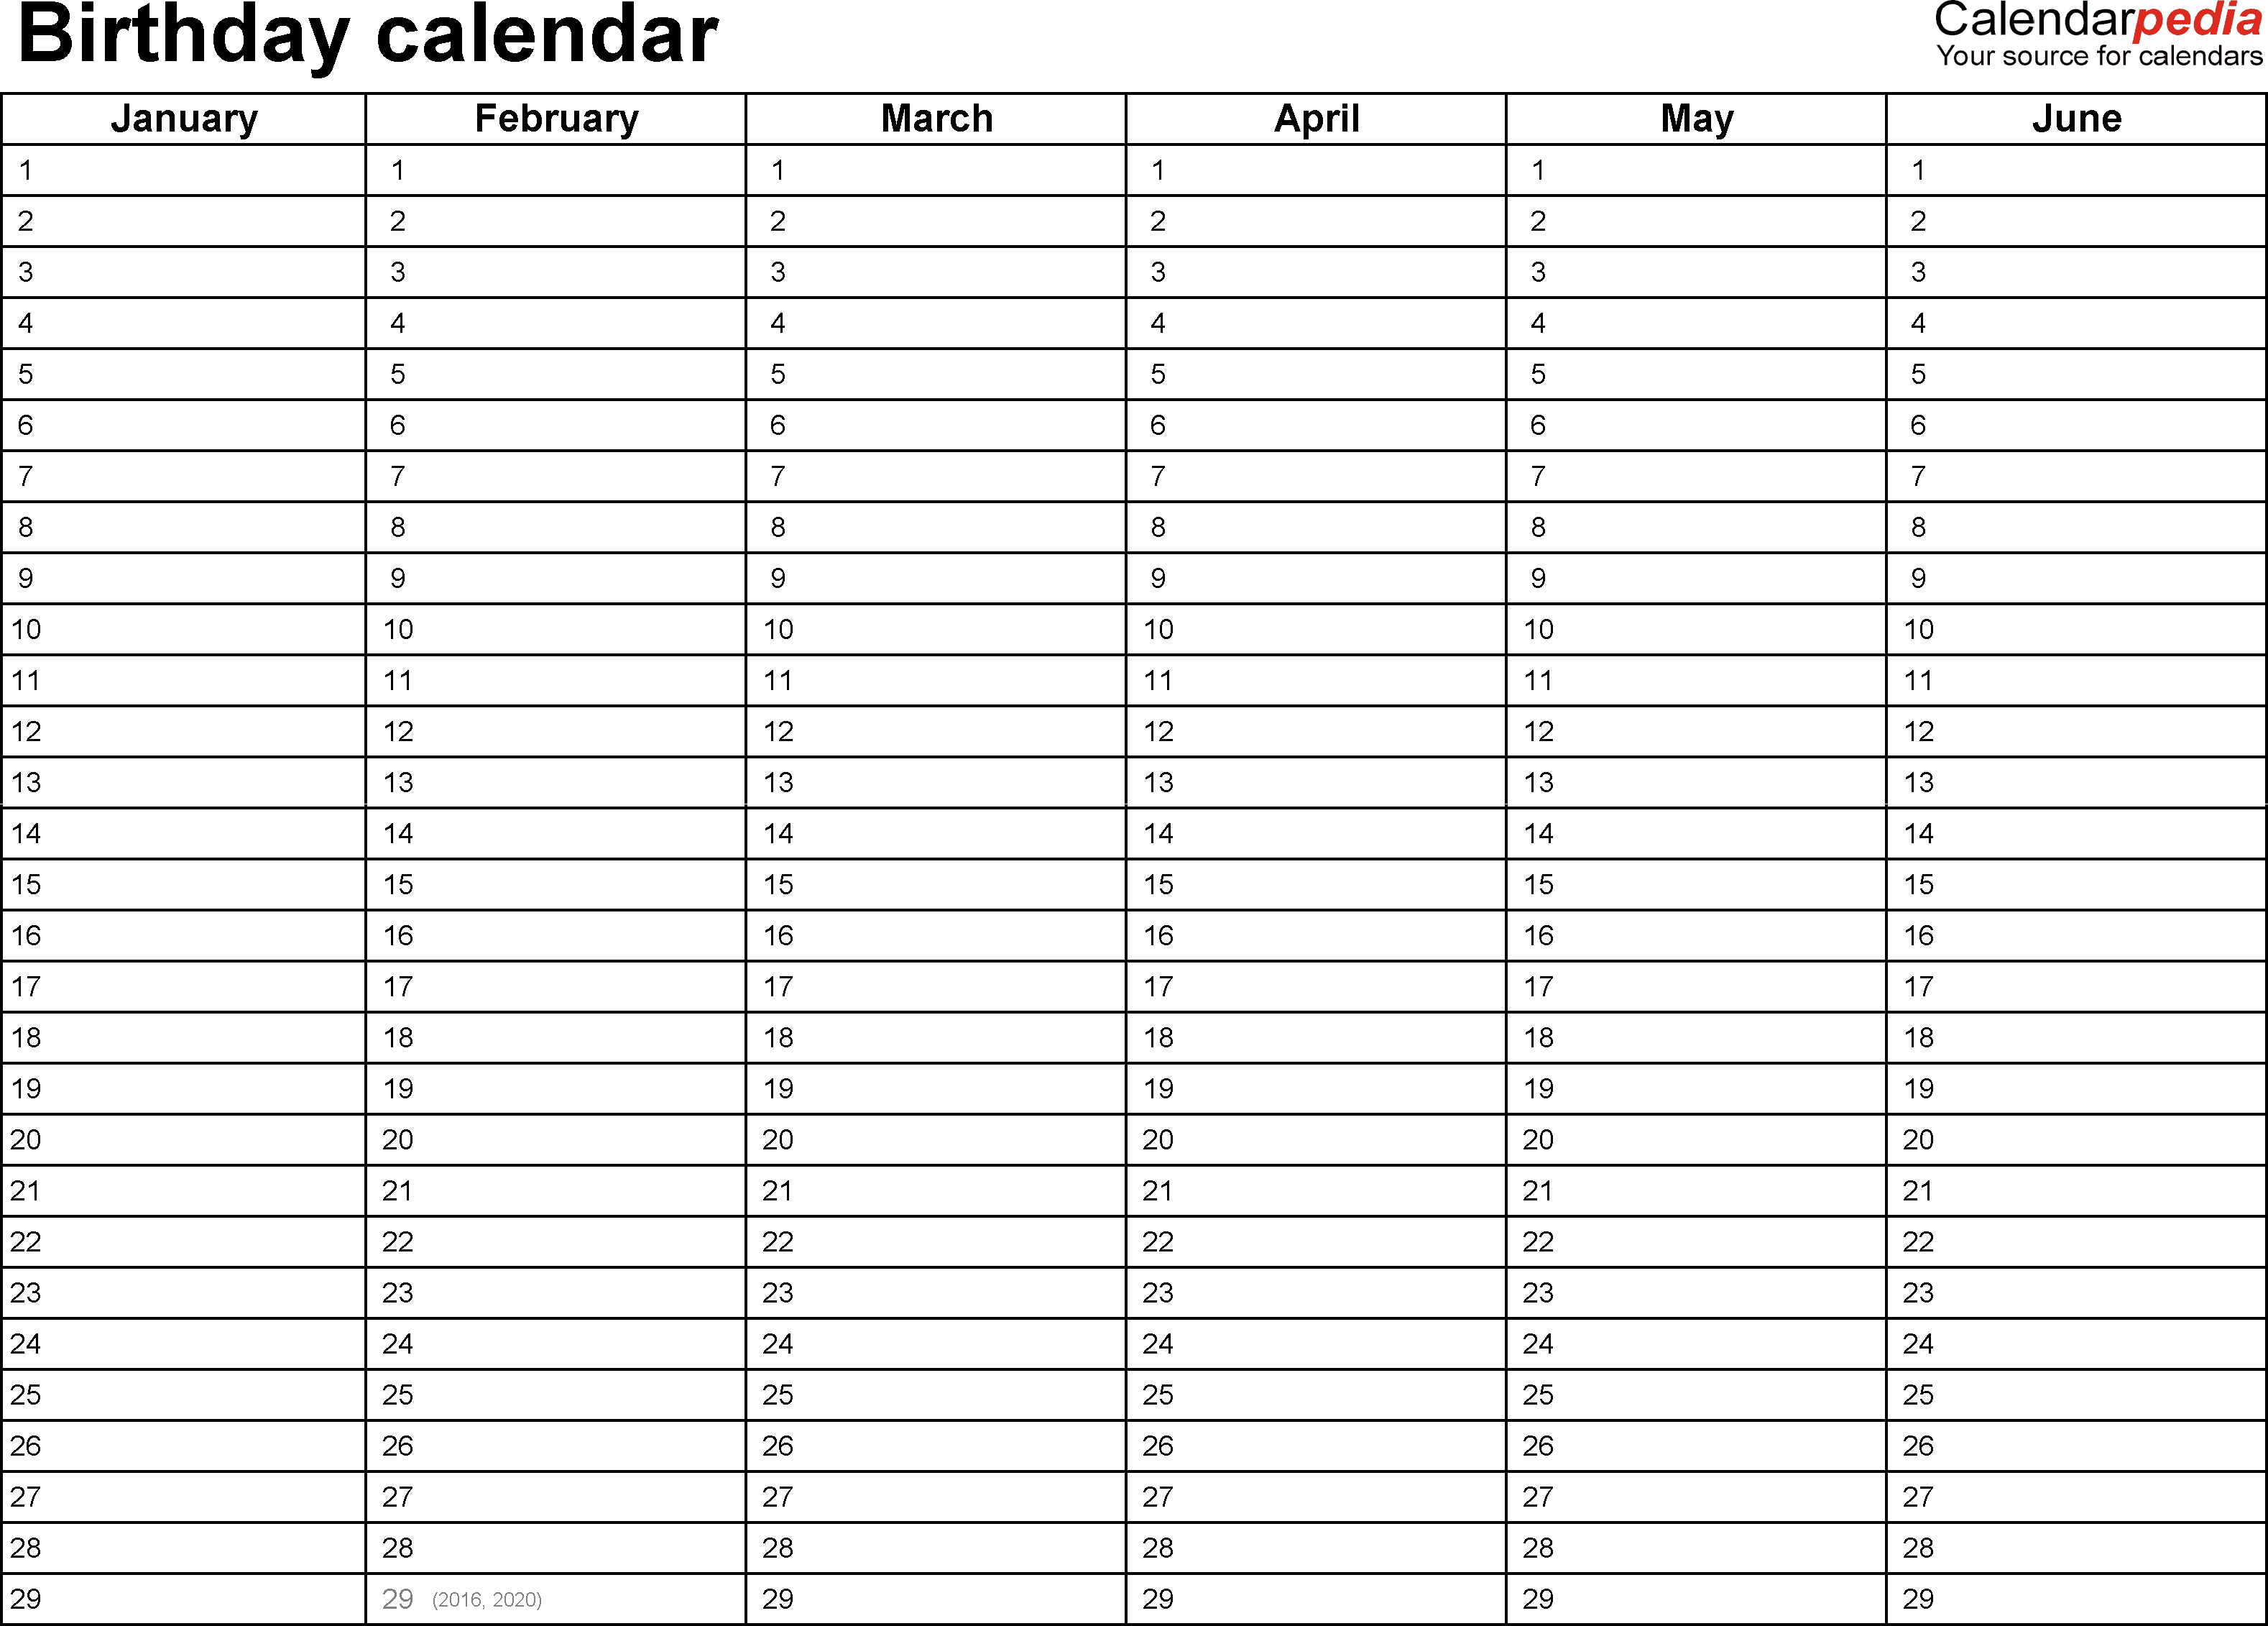 Birthday Calendars - Free Printable Microsoft Word Templates